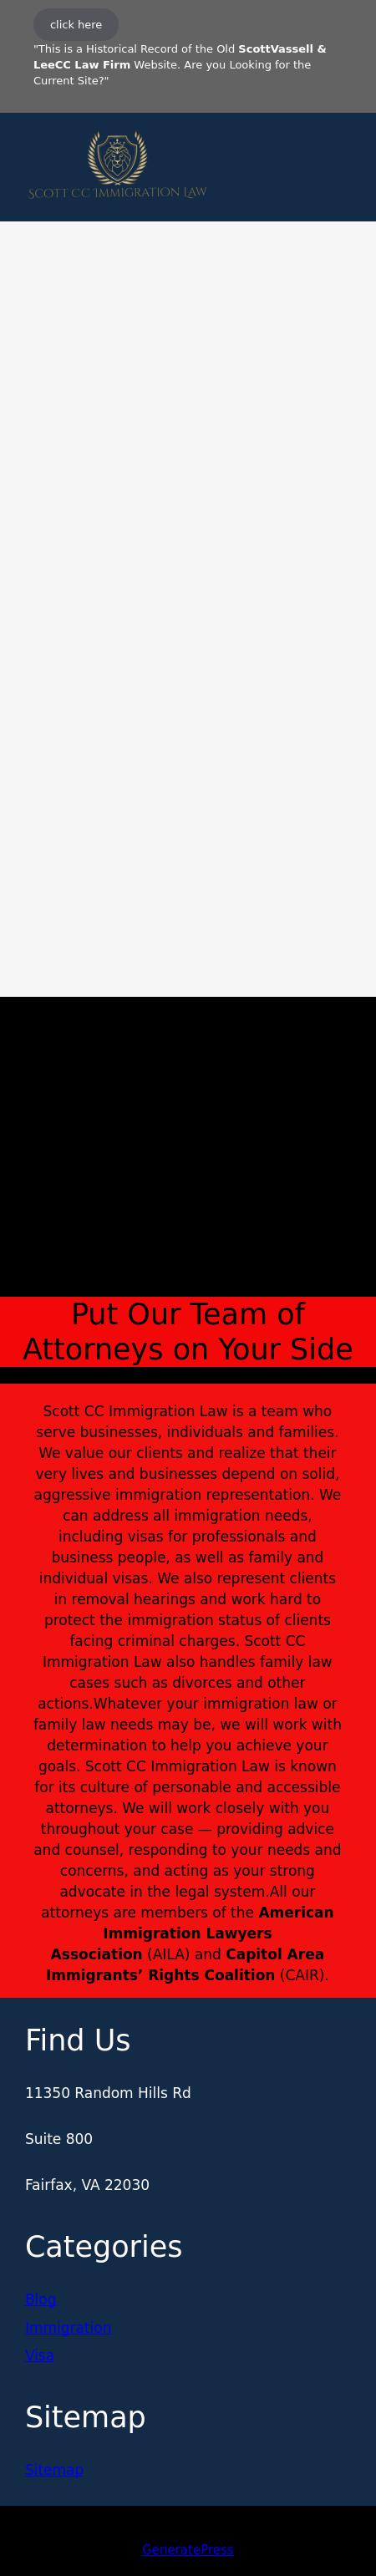 ScottDel-CC Law Group - Washington DC Lawyers